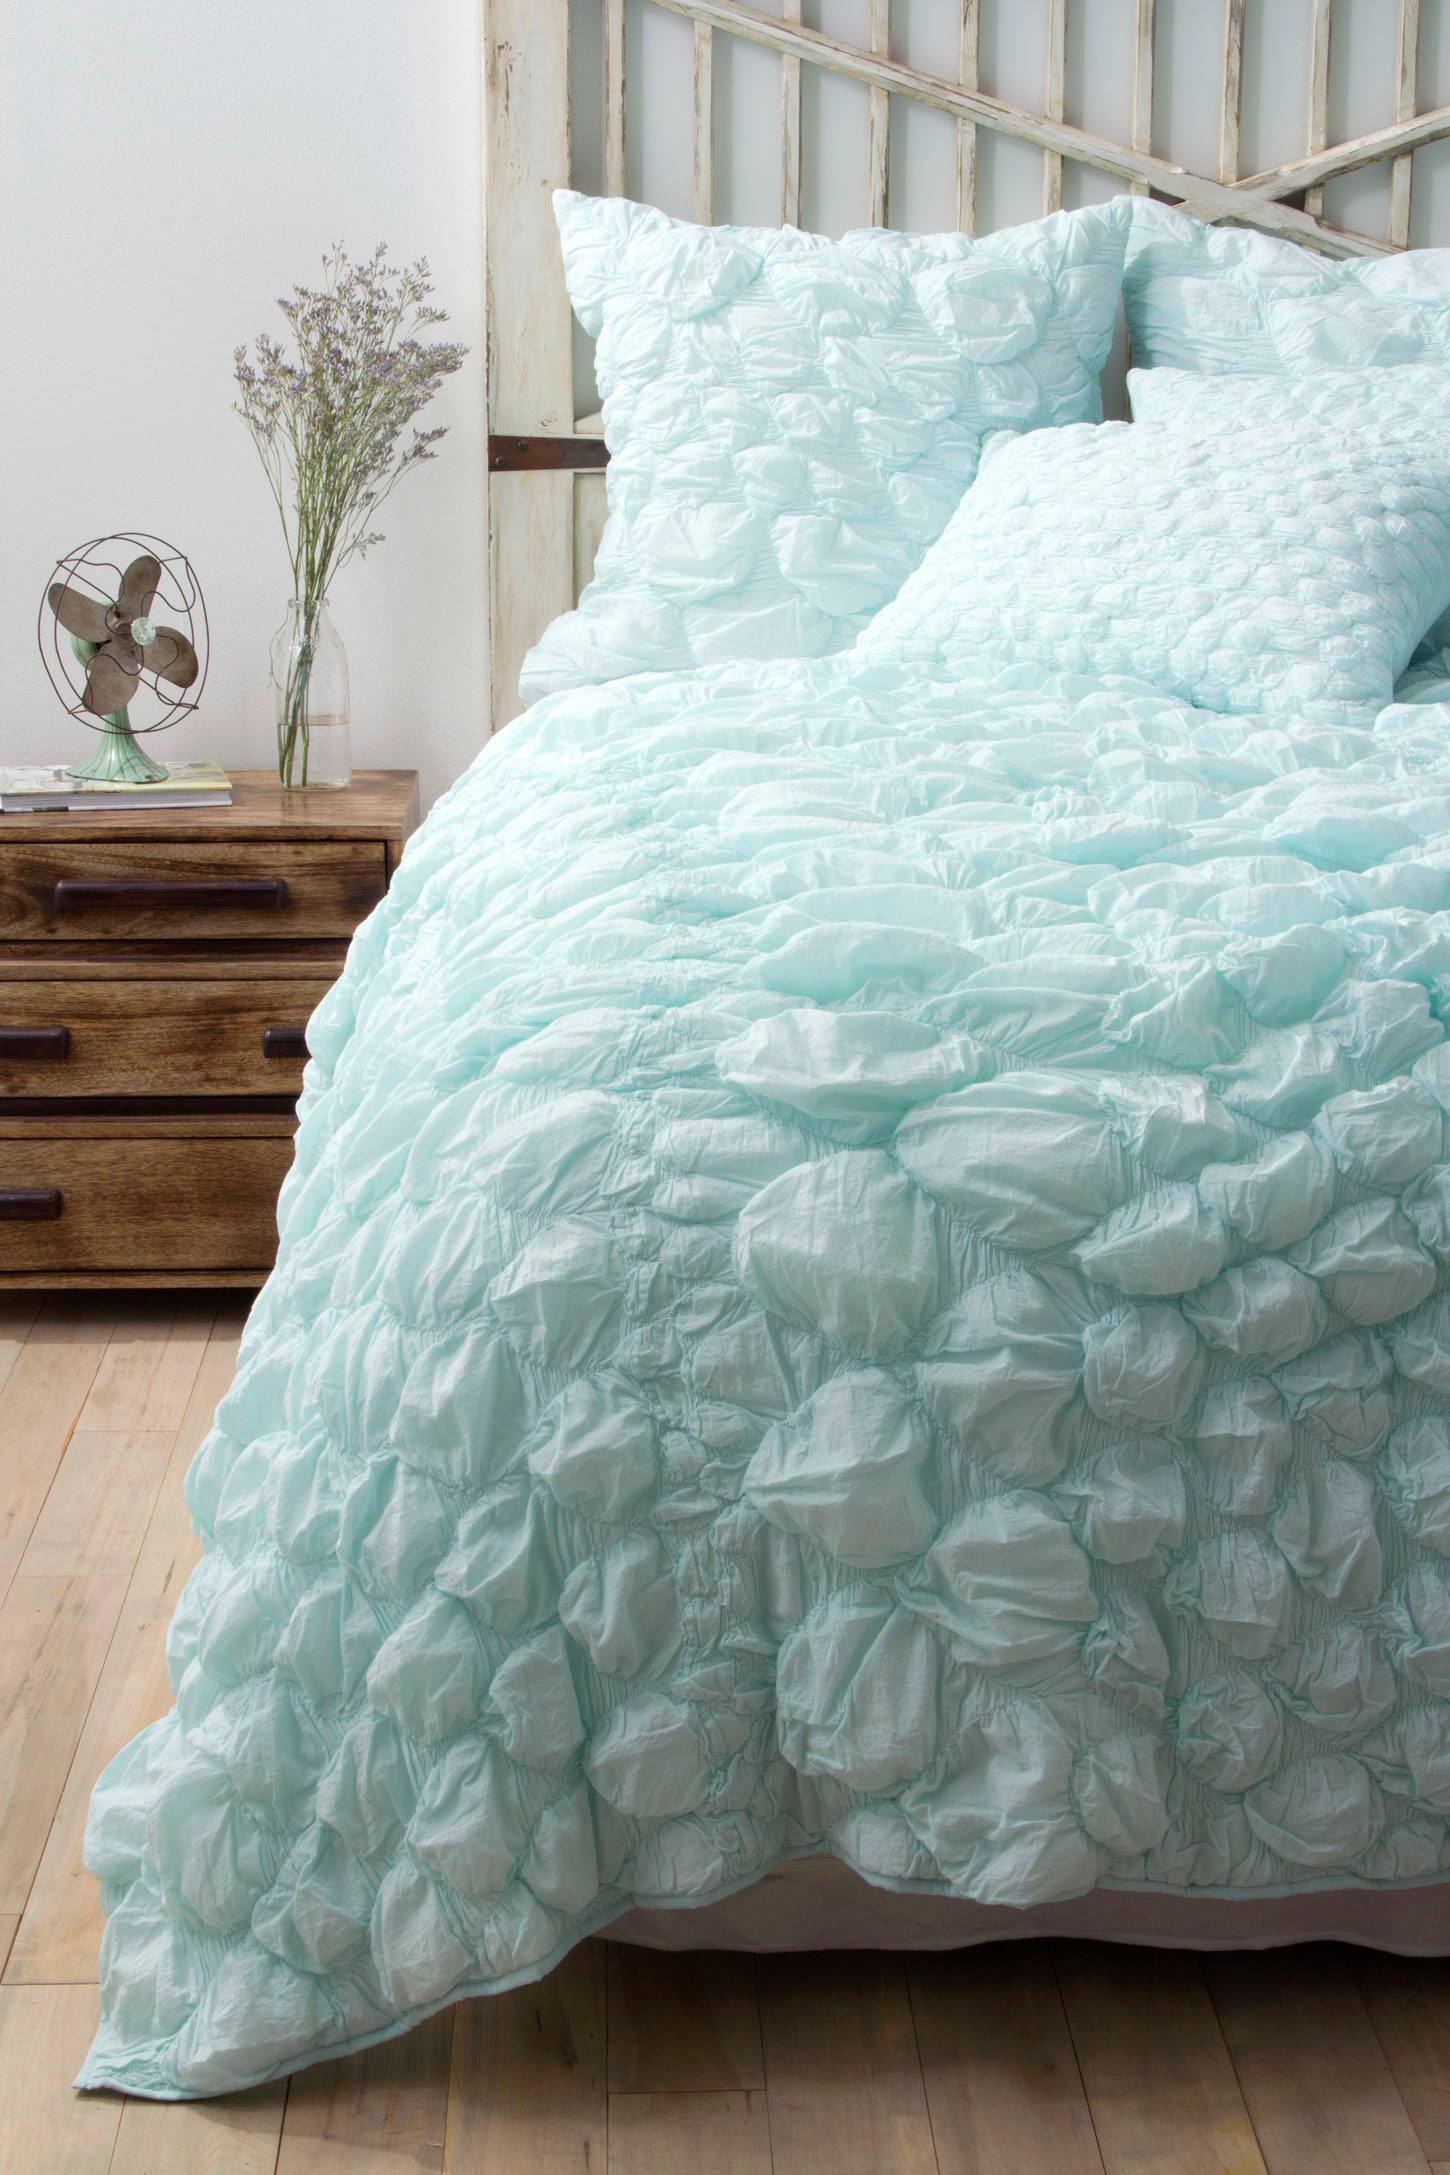 Blue fluffy bedding